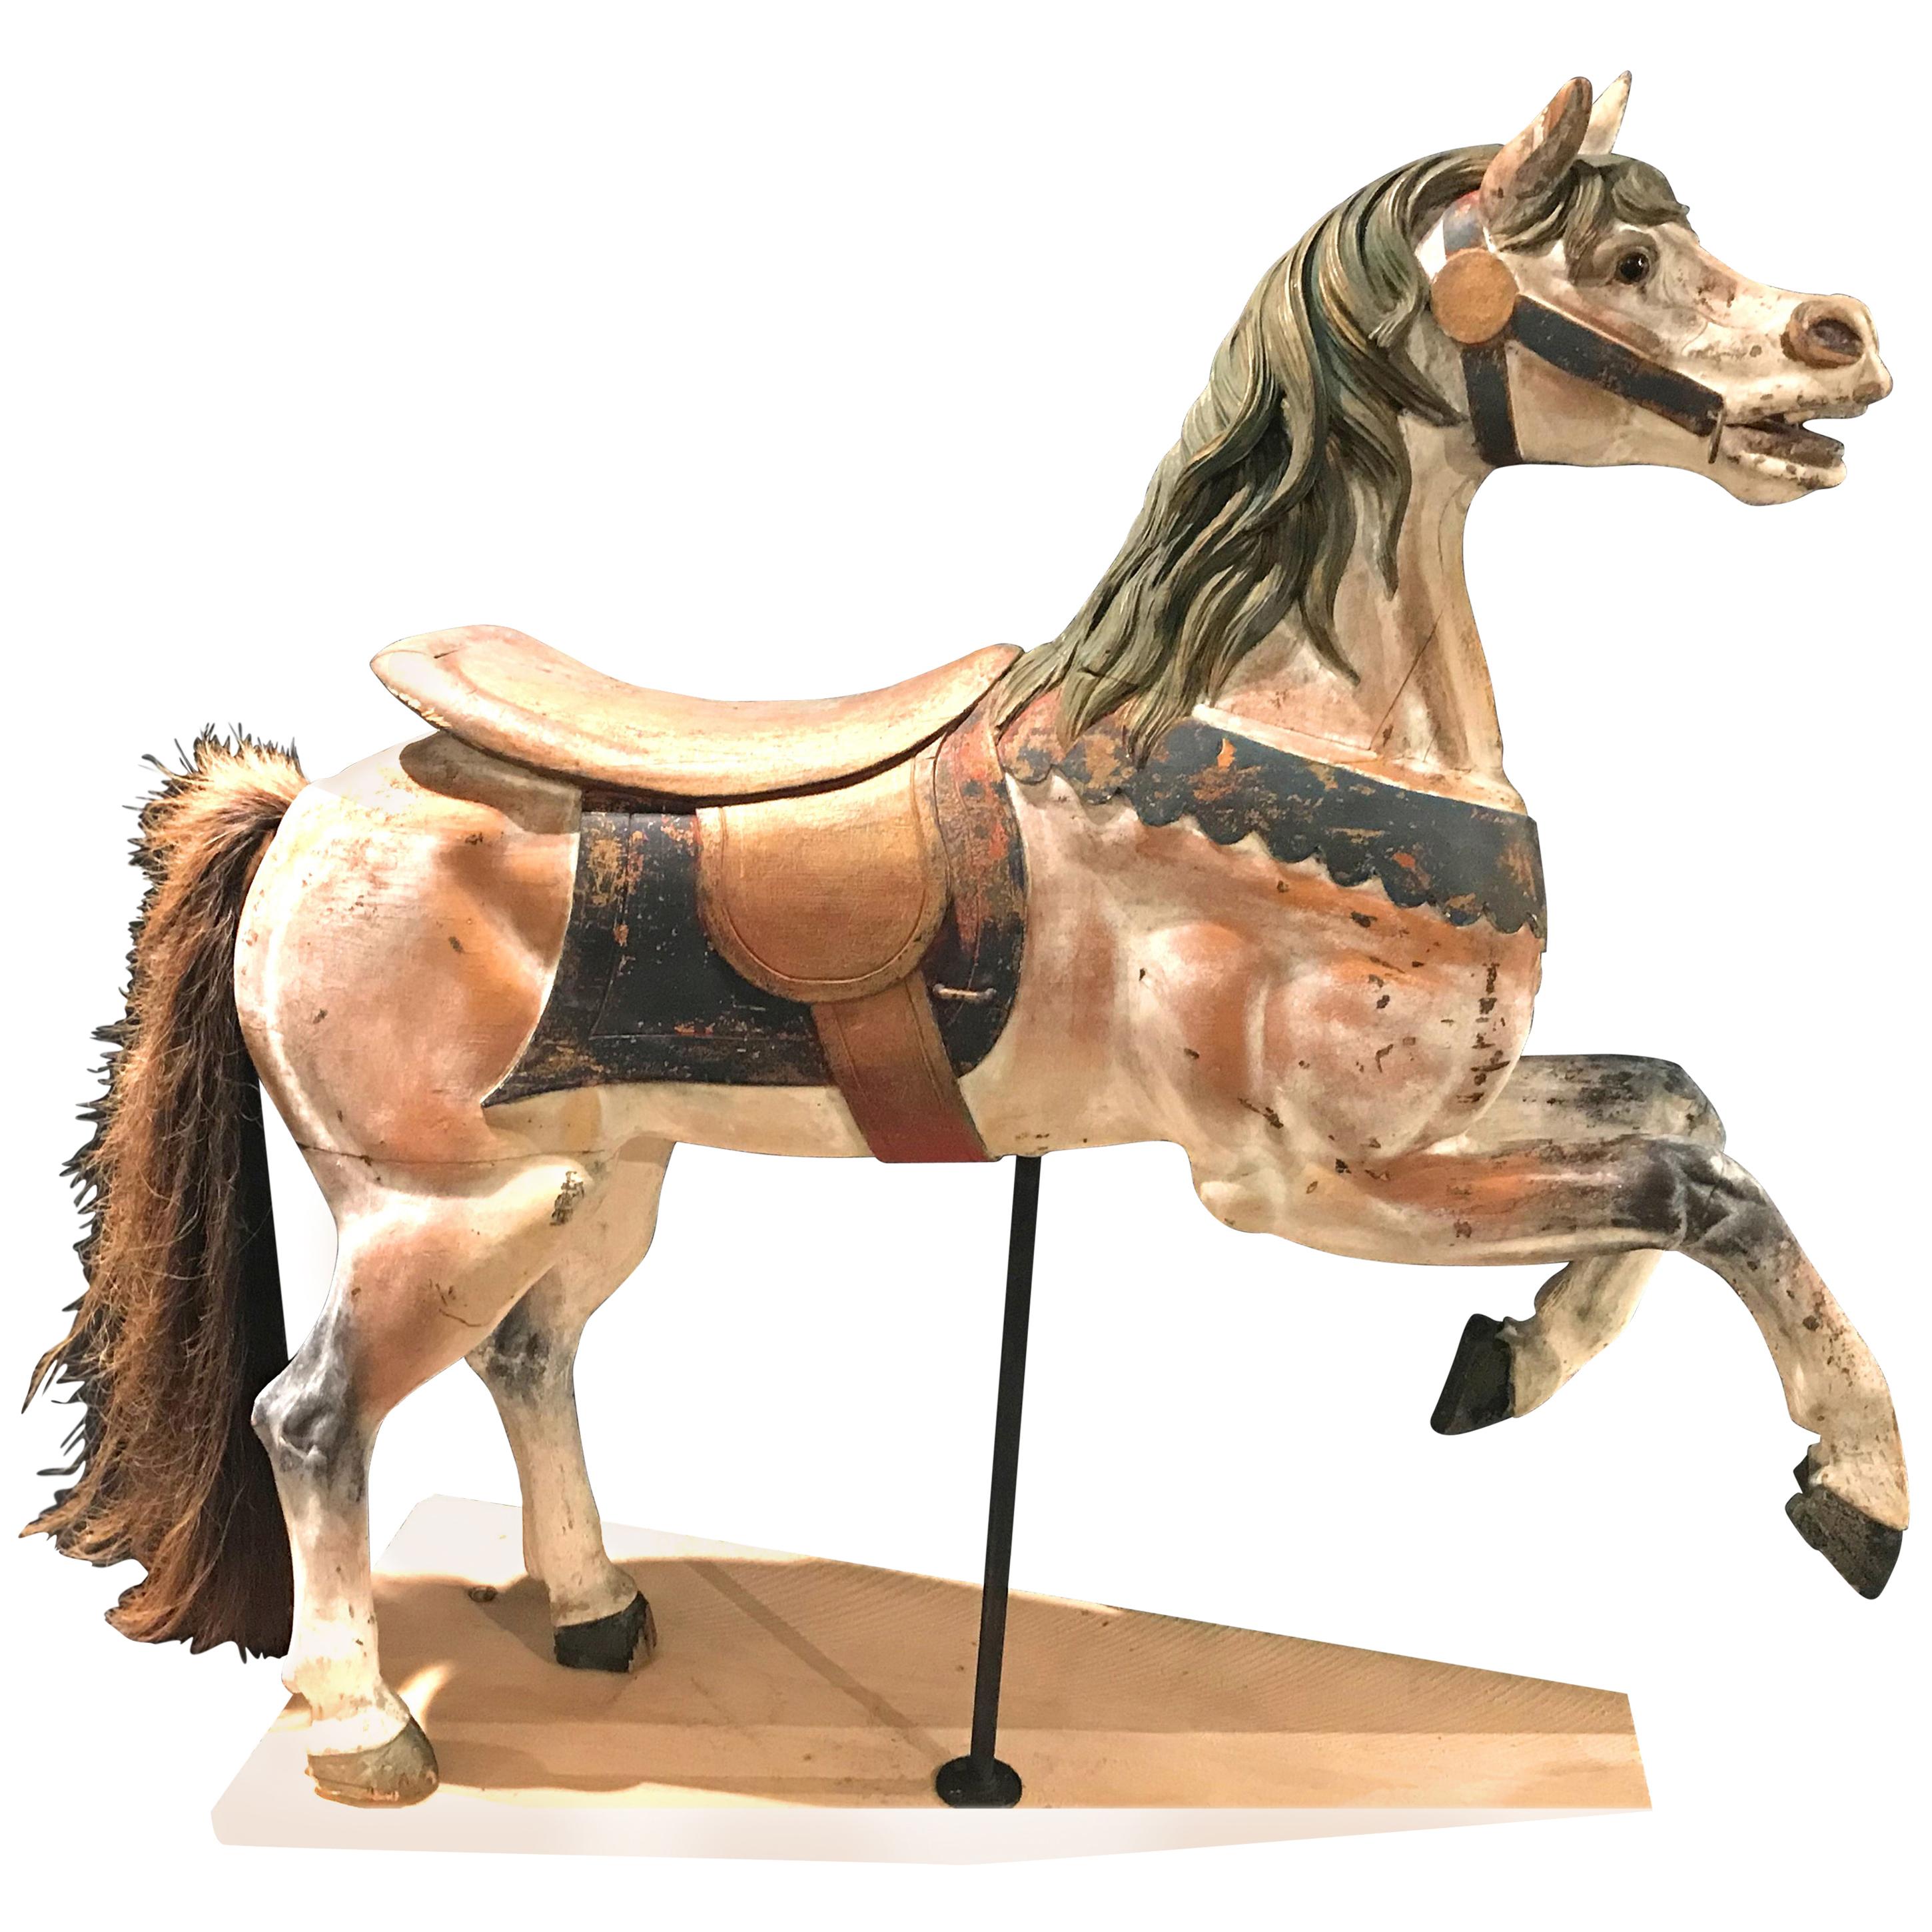 Philadelphia Toboggan Co Polychrome Carved Wooden Carousel Horse